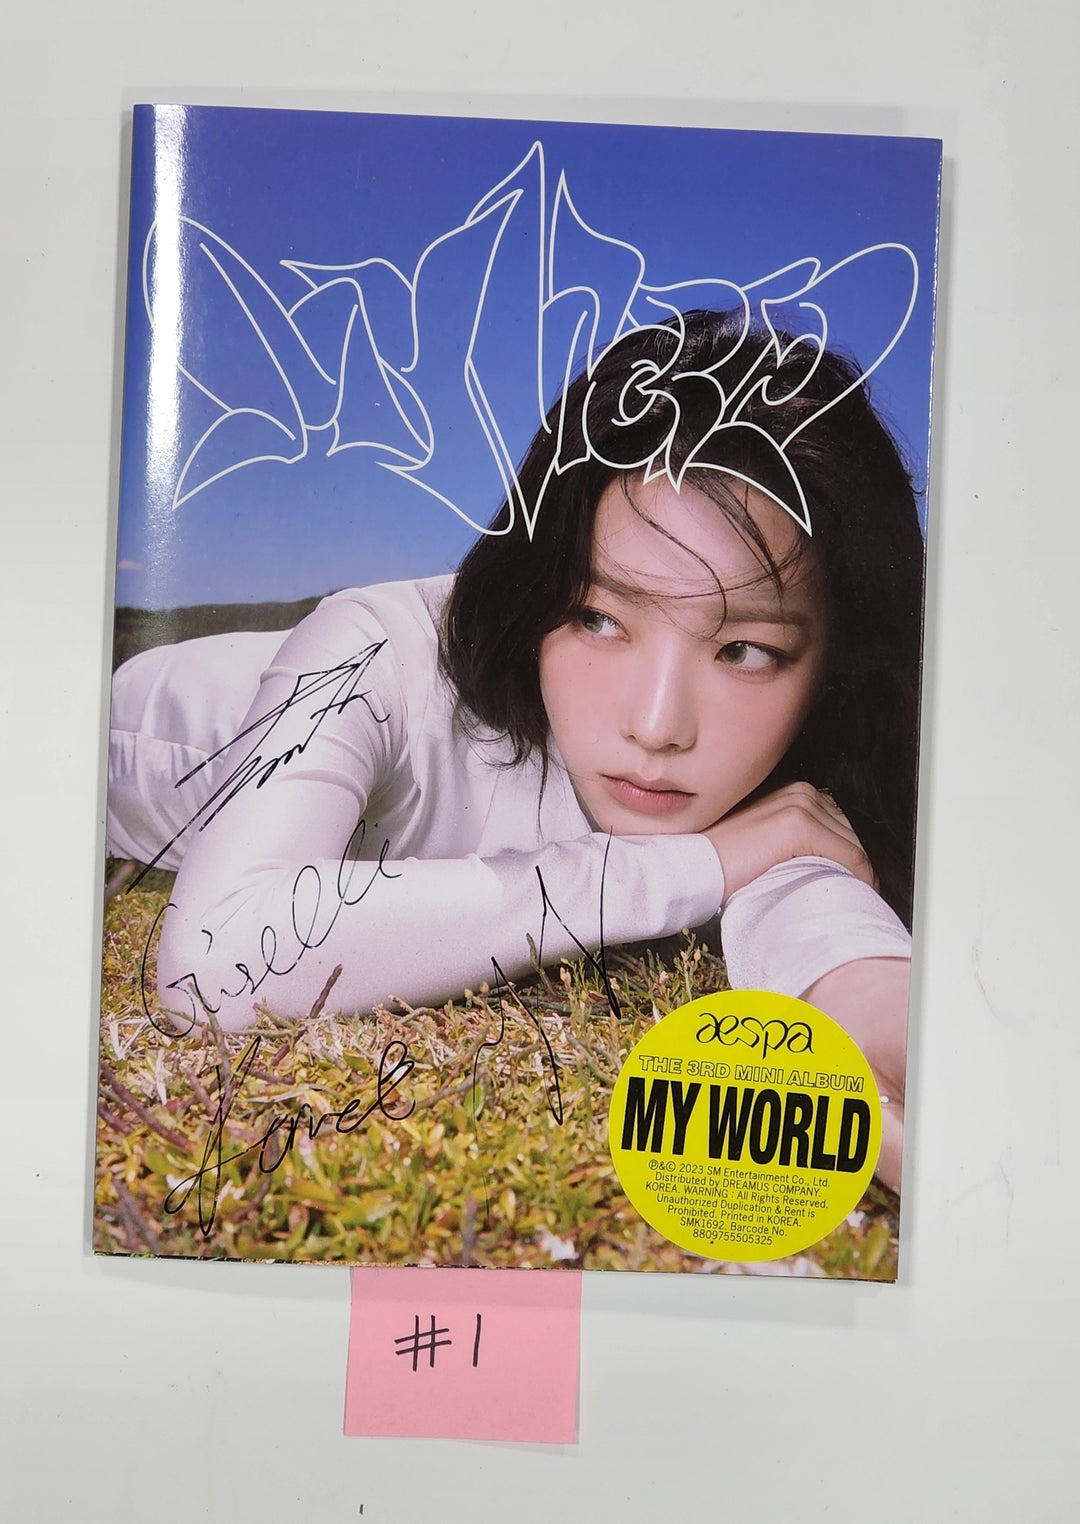 Aespa "MY WORLD" - Hand Autographed(Signed) Promo Album